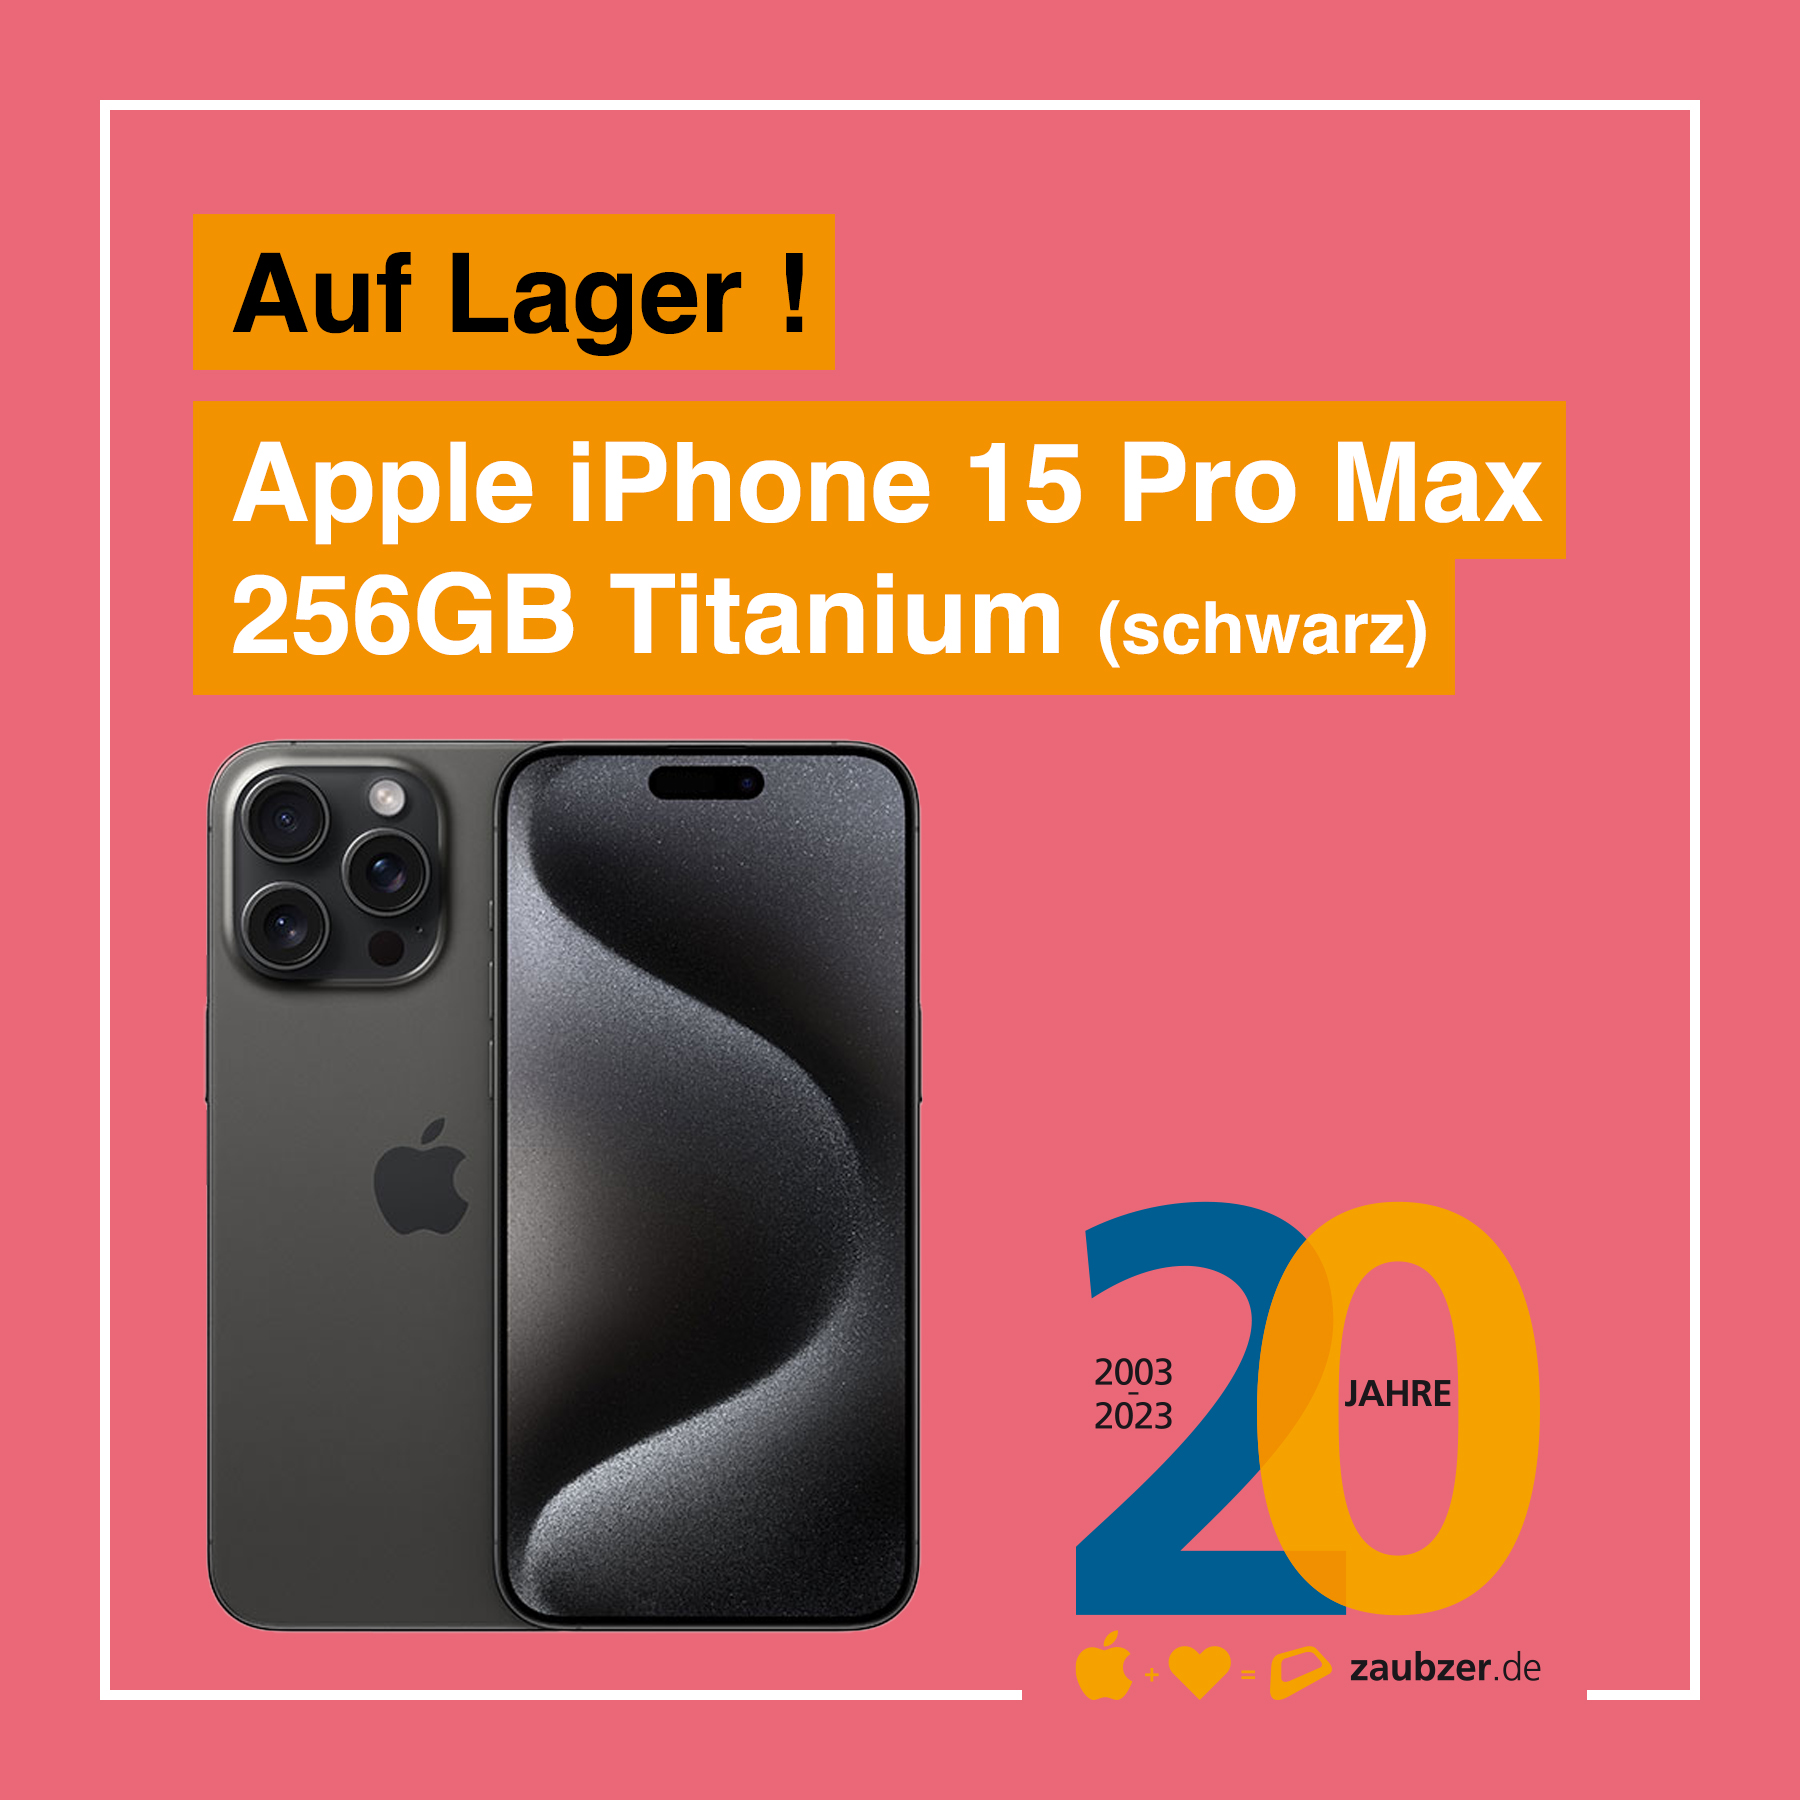 Apple iPhone 15 Pro Max 256GB Titanium (schwarz) - zaubzer.de - Mannheim